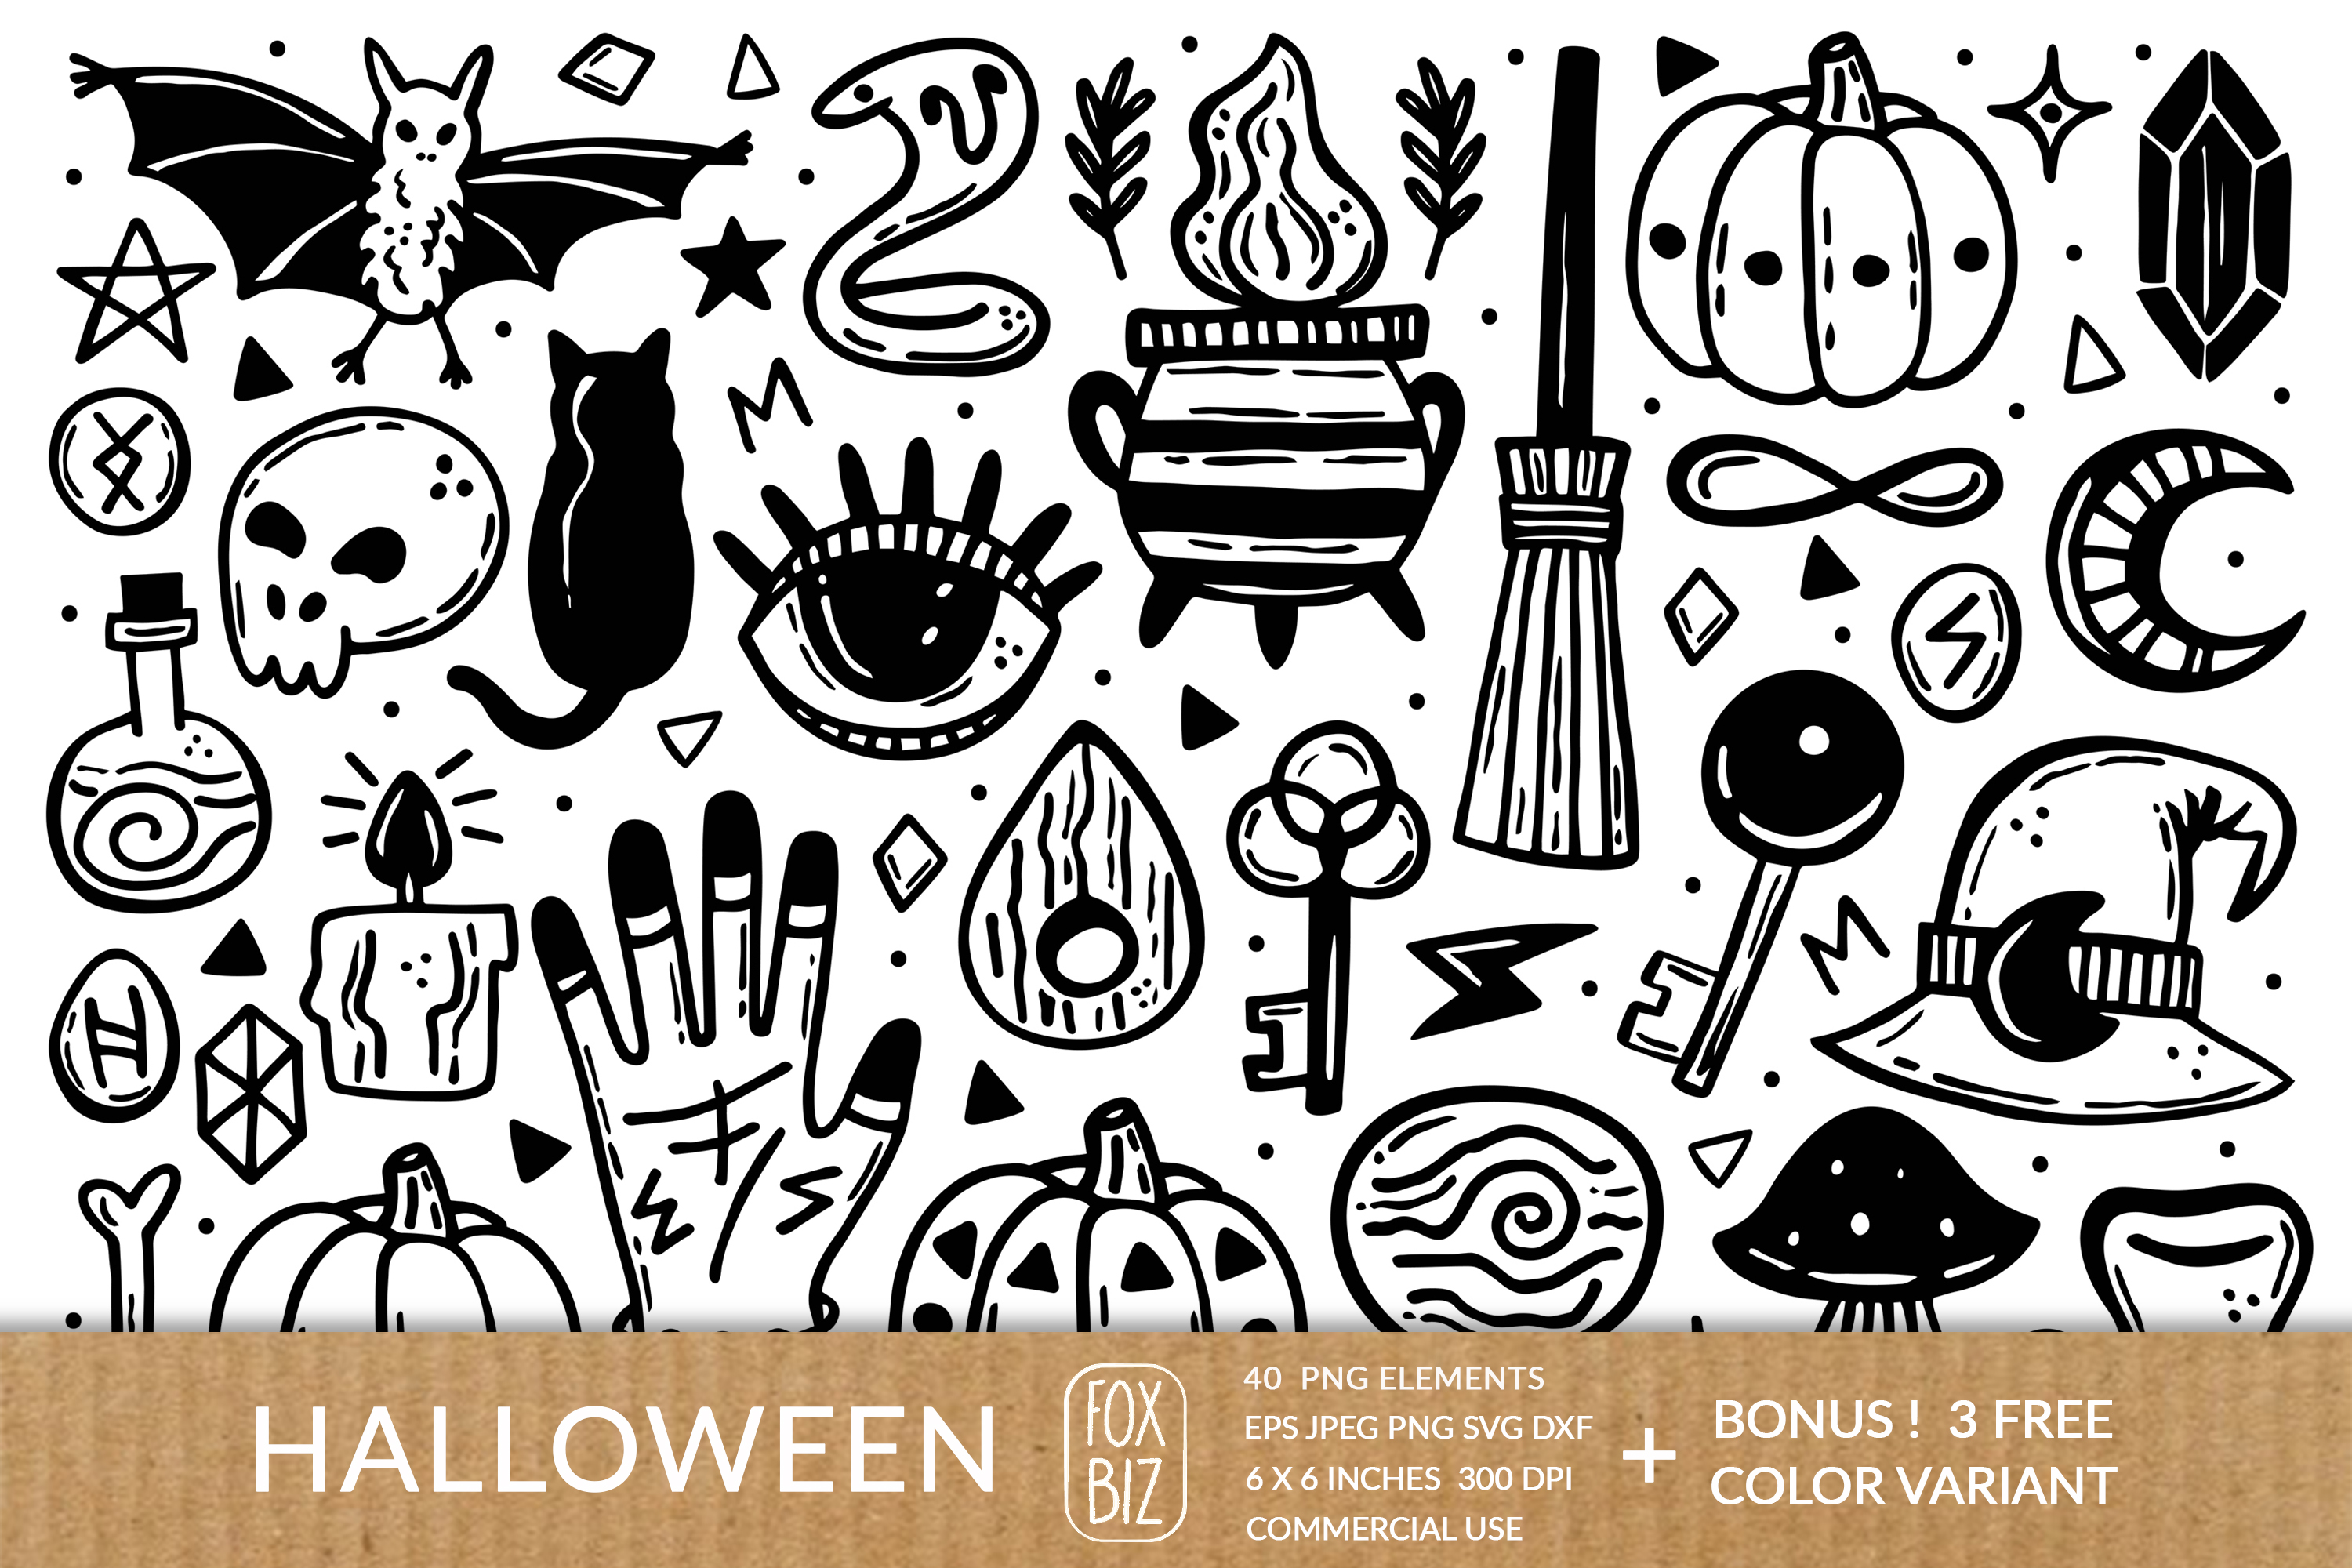 Download Ink Halloween Graphic By Foxbiz Creative Fabrica